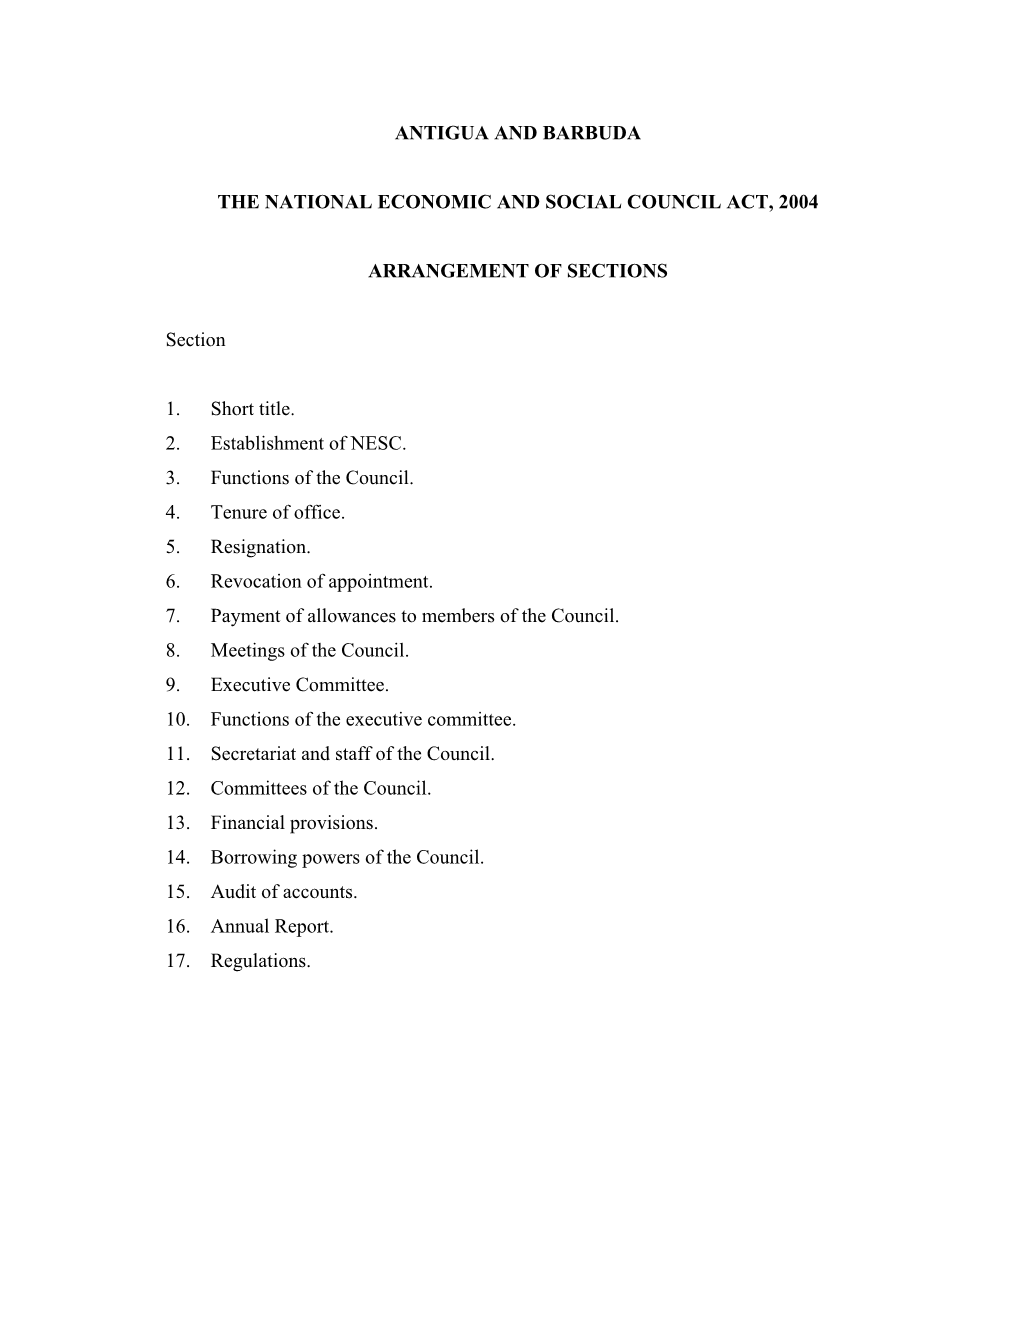 The National Economic Social Council Act, 2004